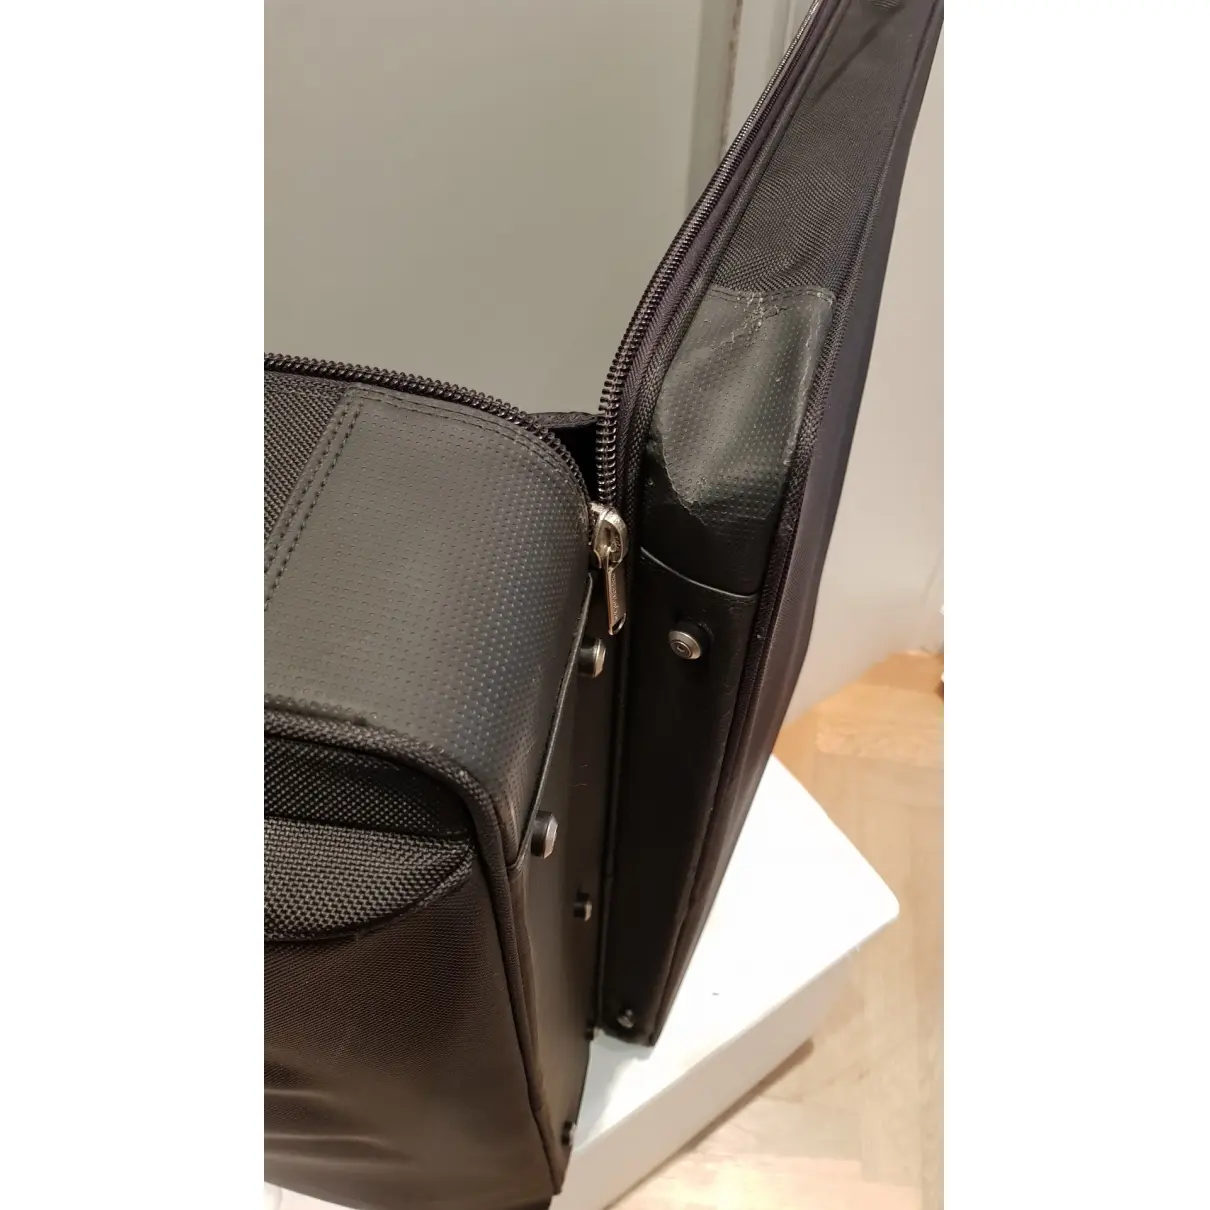 Porsche Design Cloth travel bag for sale